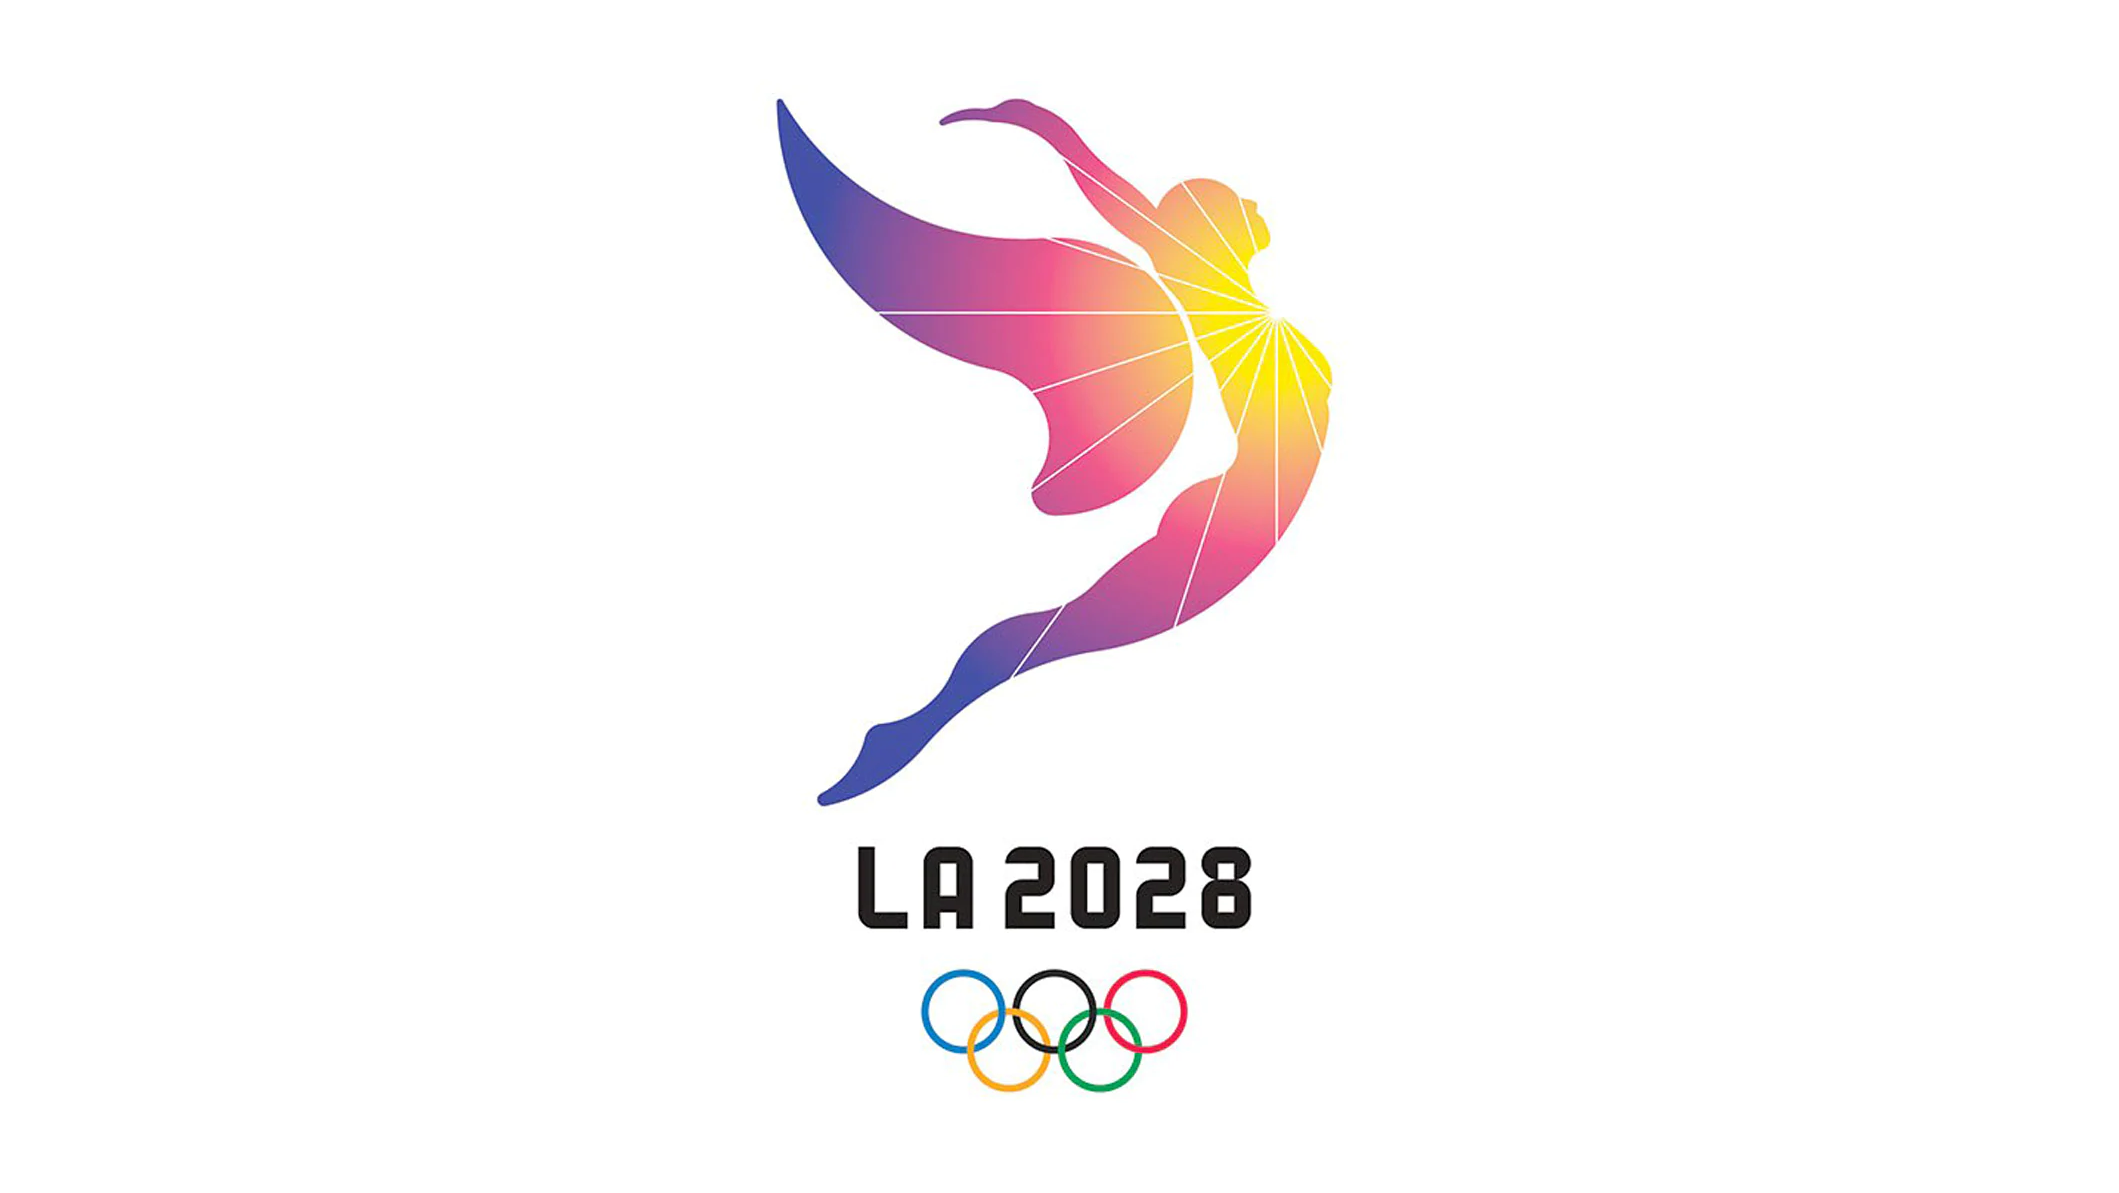 Logotip LA 2028 fons blanc